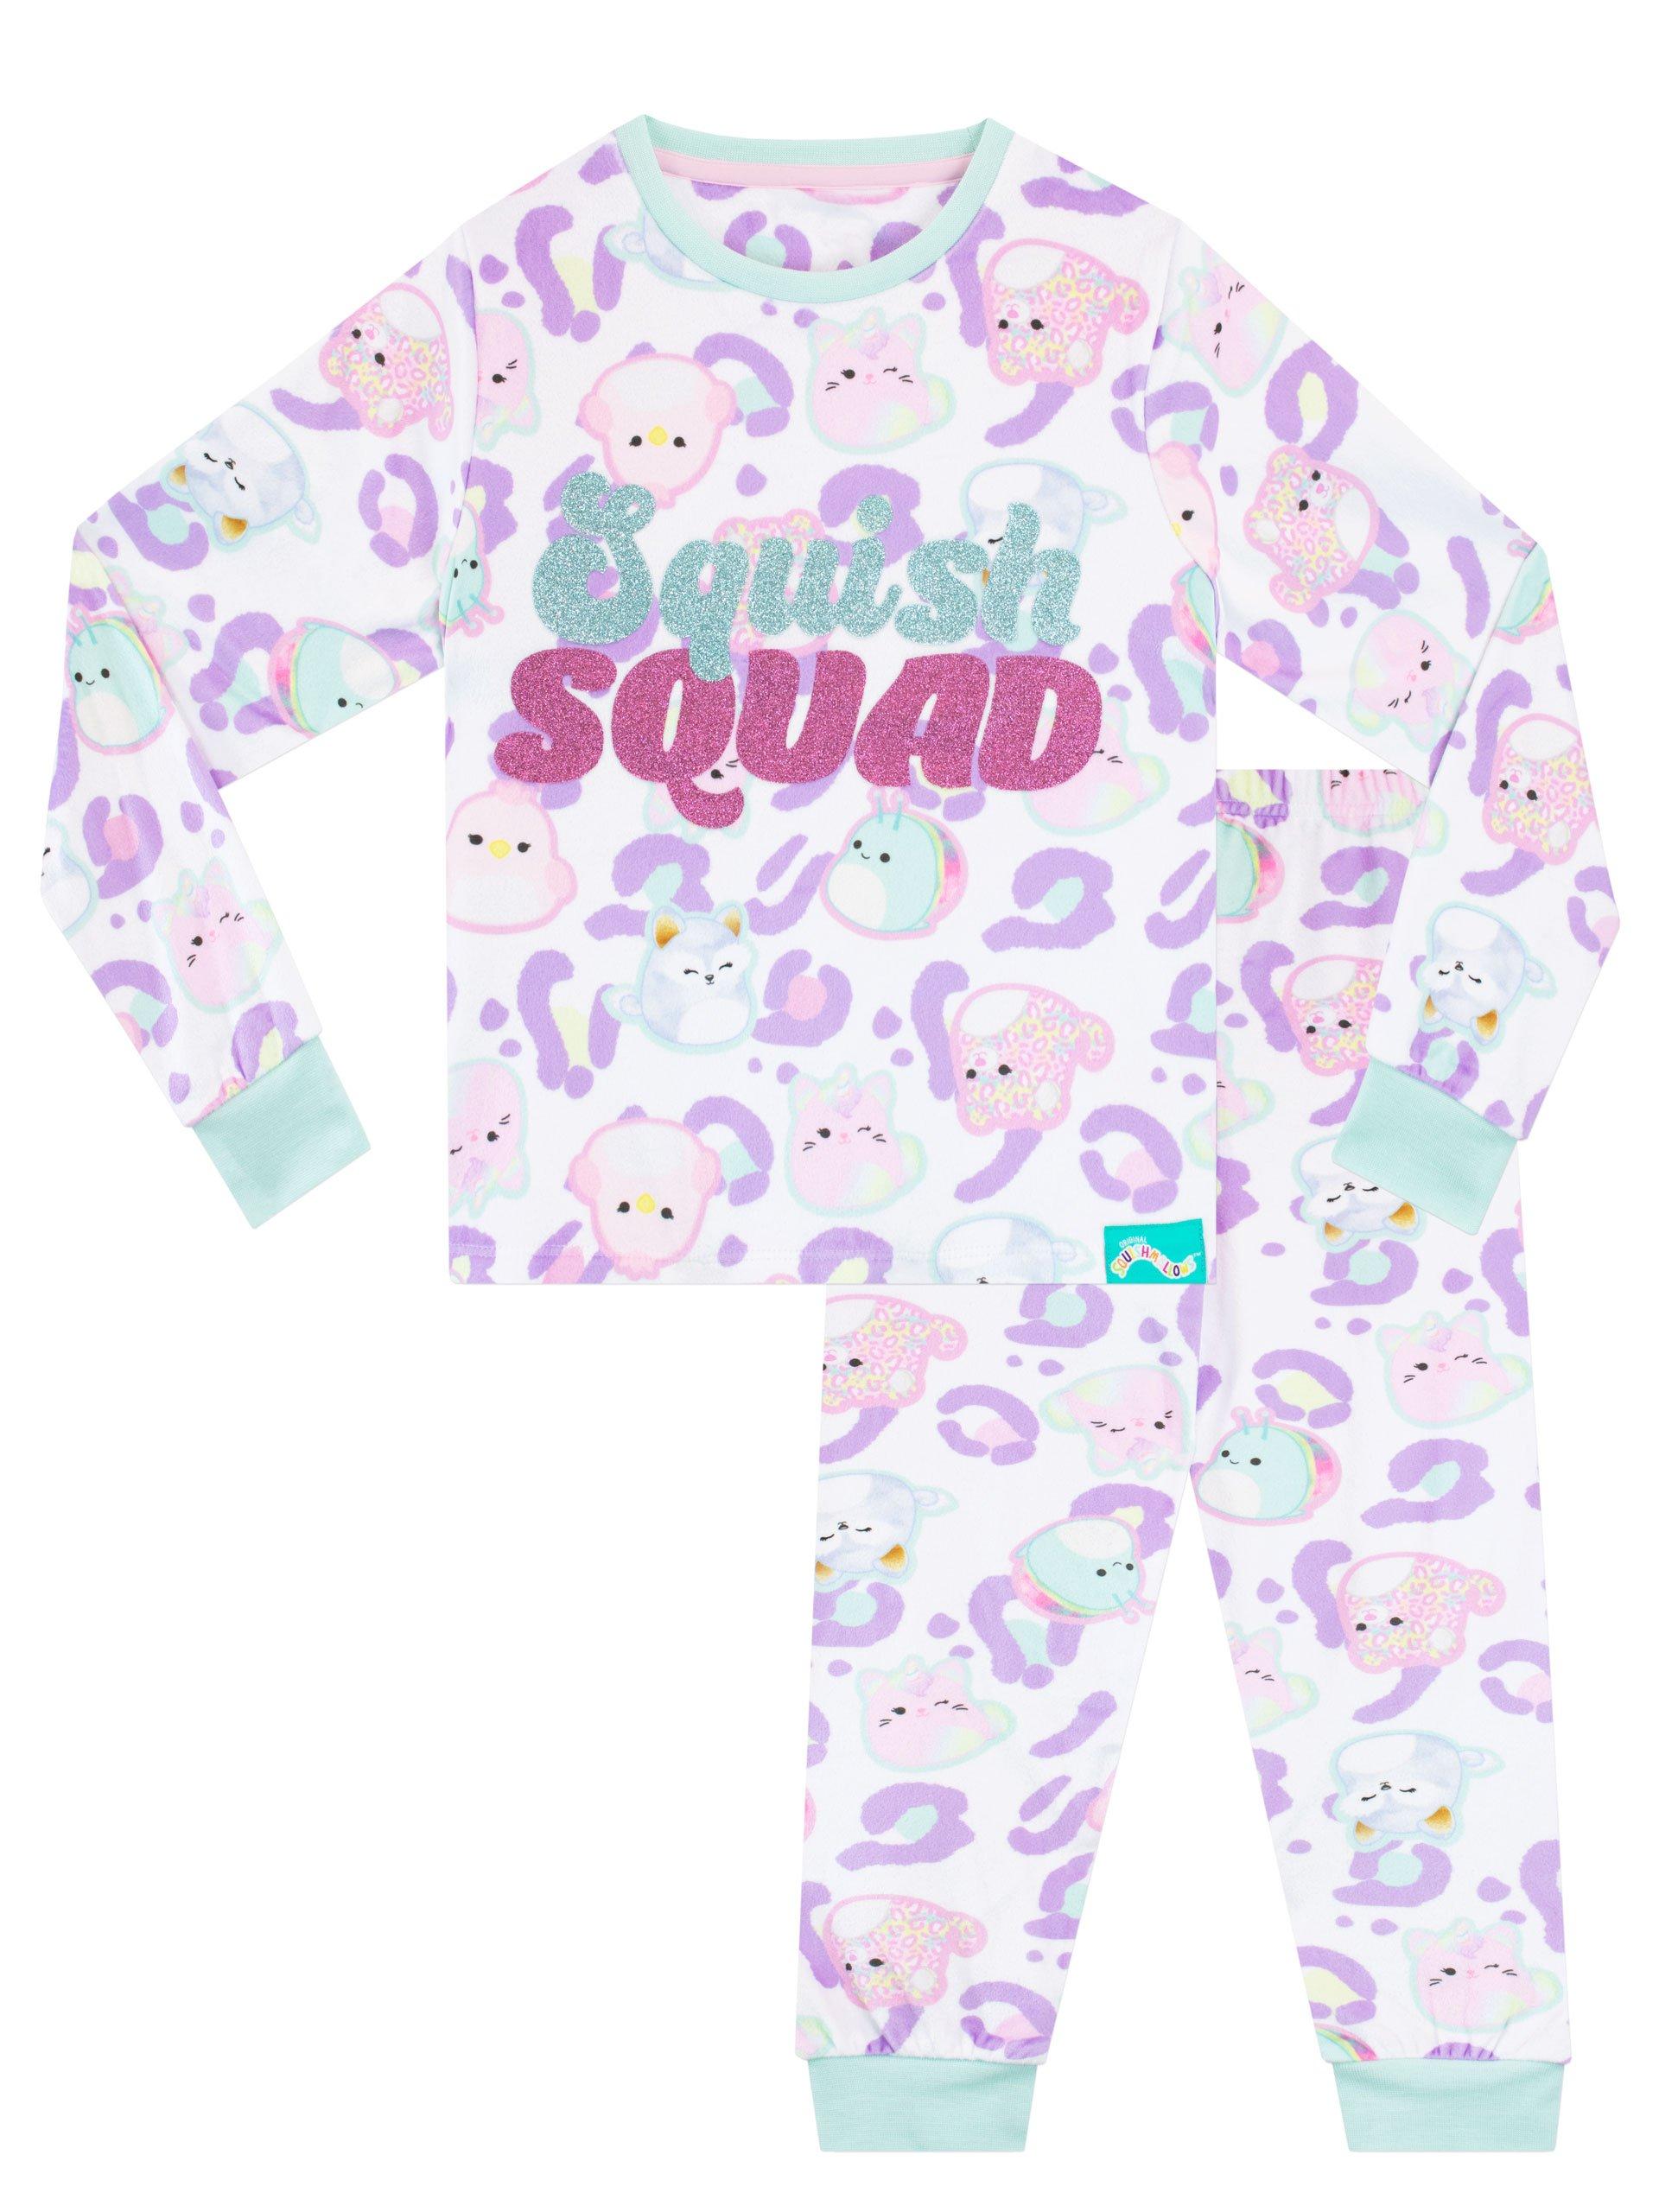 Флисовая пижама Squish Squad Squishmallows, белый